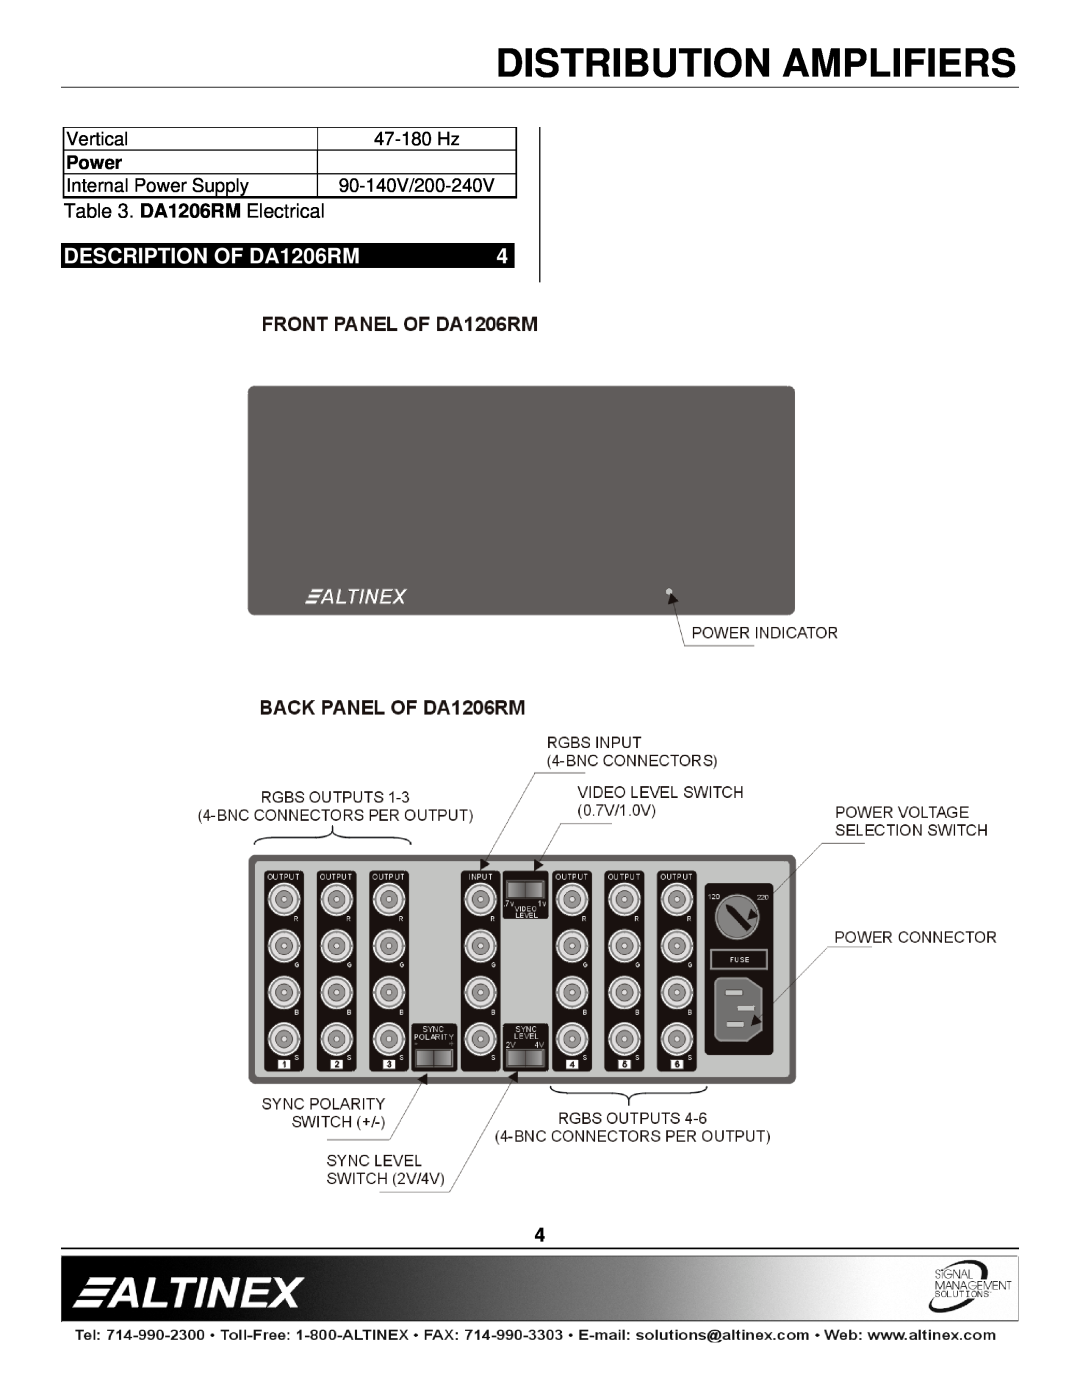 Altinex manual DESCRIPTION OF DA1206RM, Distribution Amplifiers, DA1206RM Electrical 